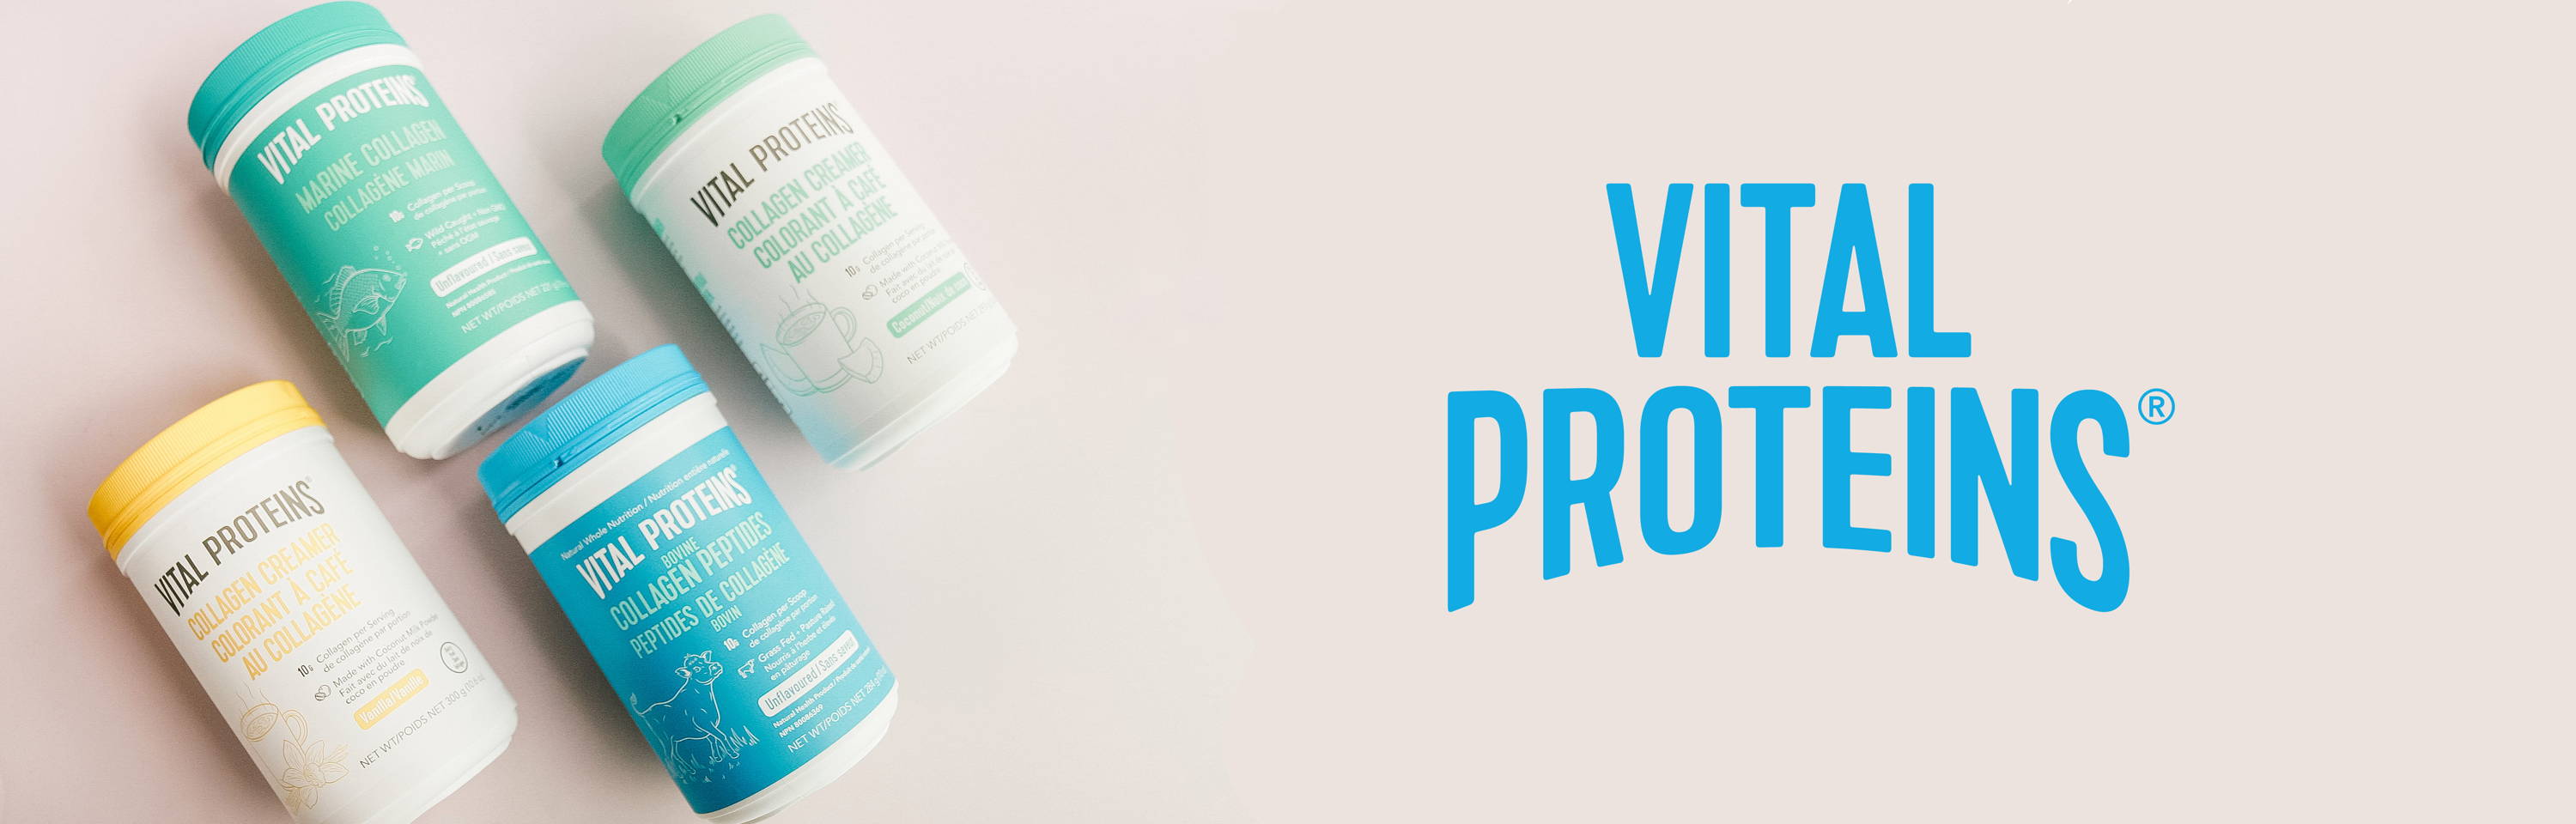 Top Vital Proteins Brand Products. Vital Proteins Collagen Peptides. Vital Proteins Vanilla Collagen Creamer.  Coconut Creamer.